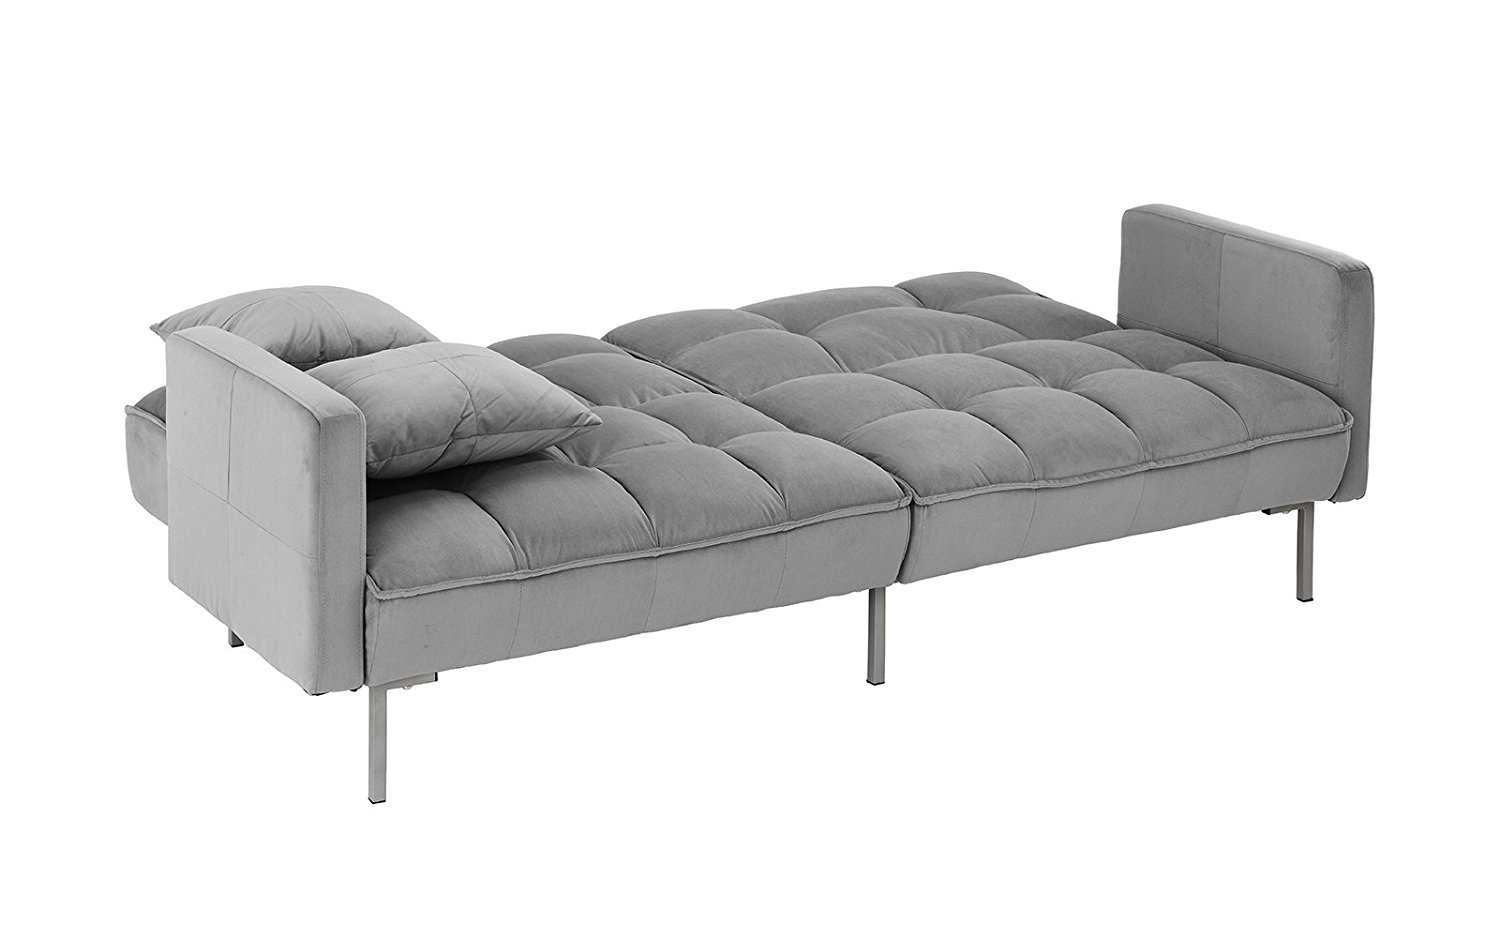 split back futon sofa bed